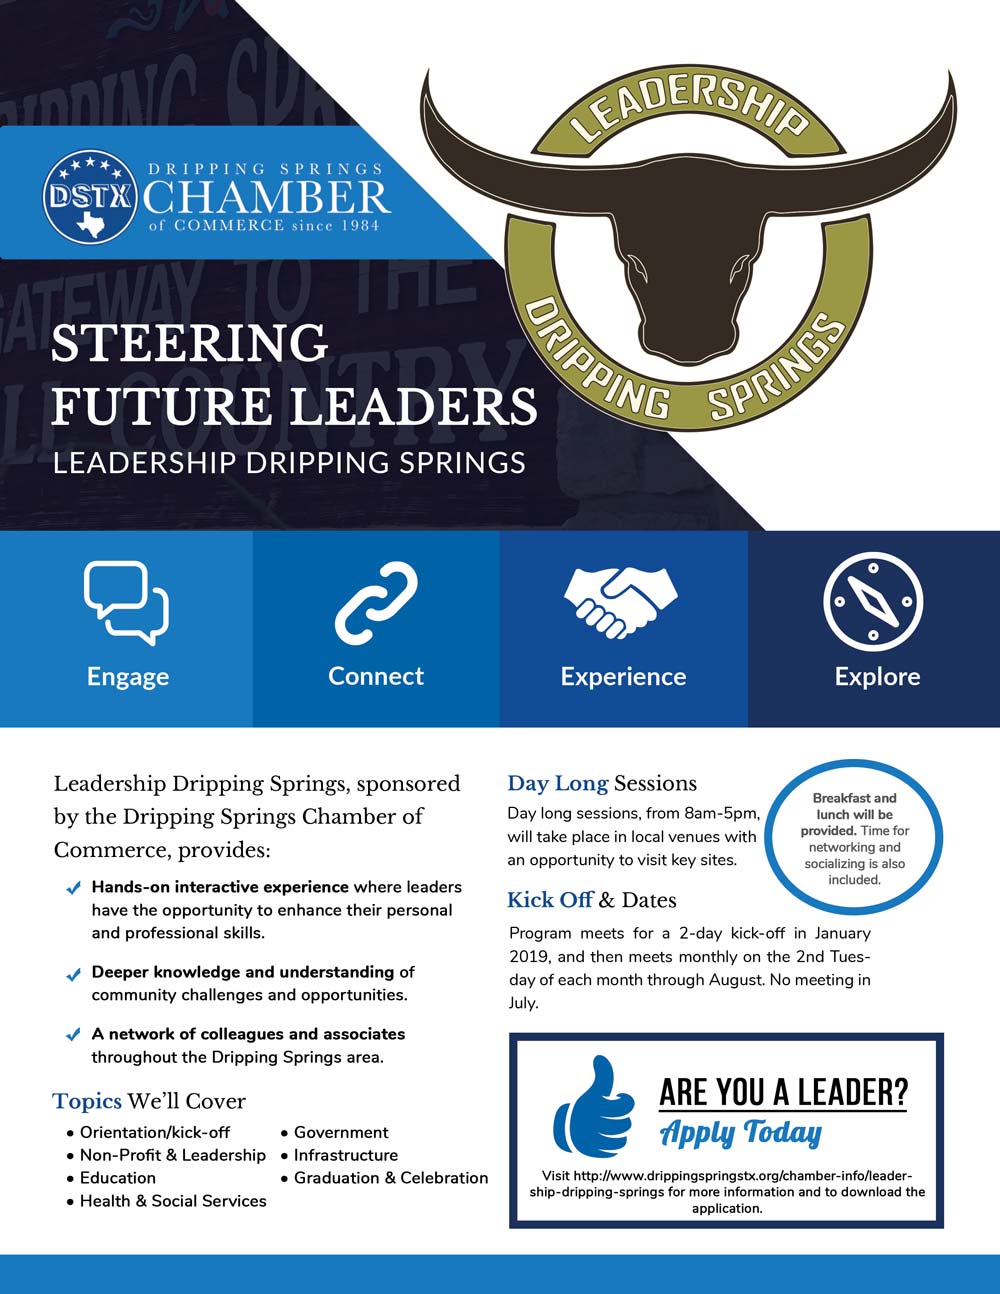 Leadership Dripping Springs 2019 Application Deadline